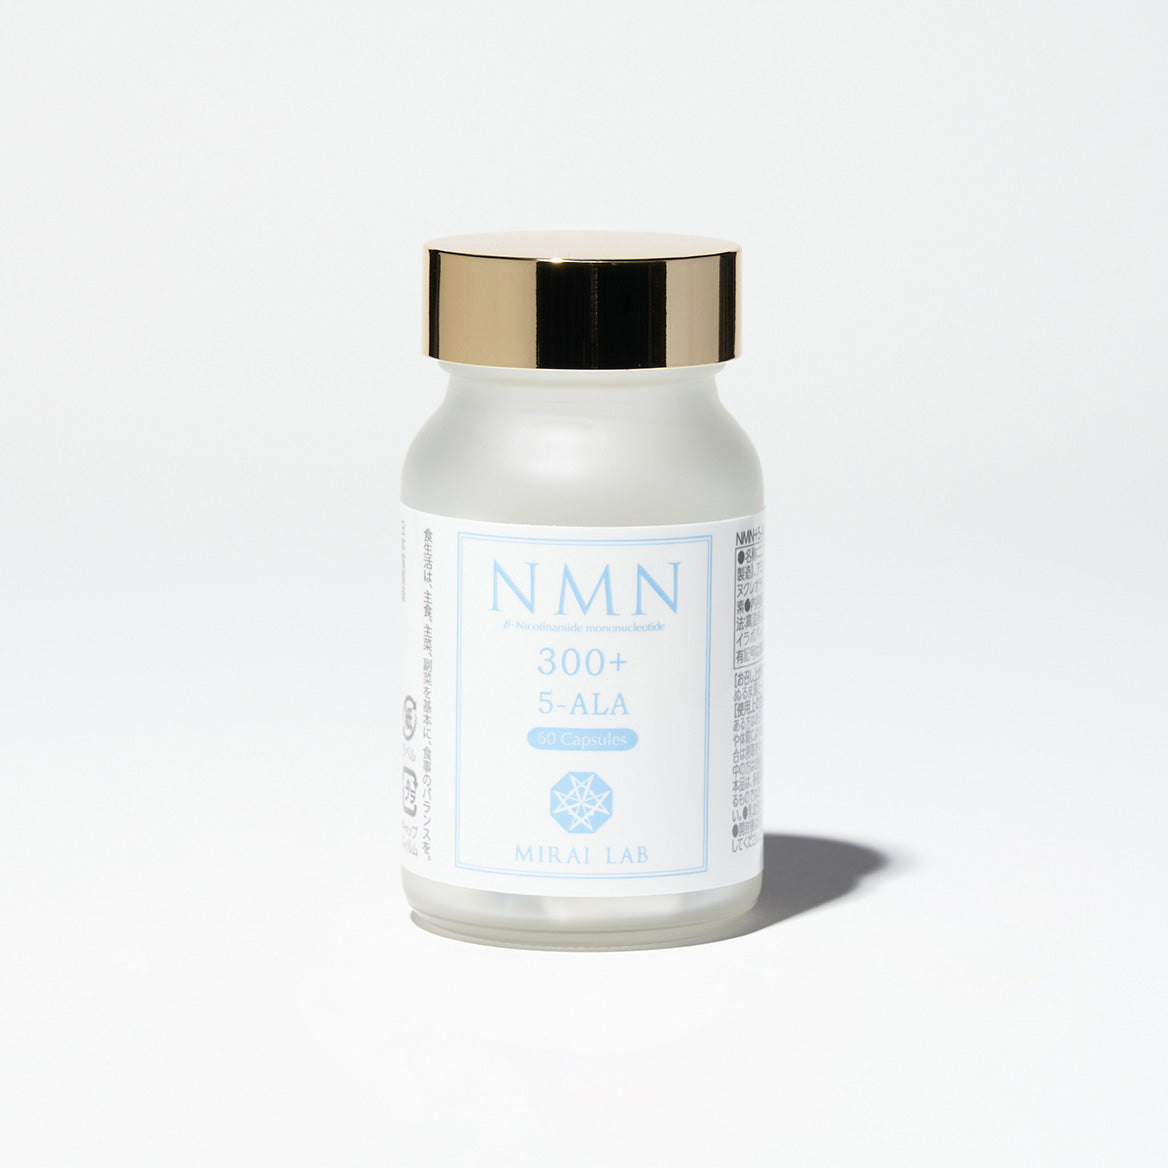 NMN + 5-ALA (60 capsules)